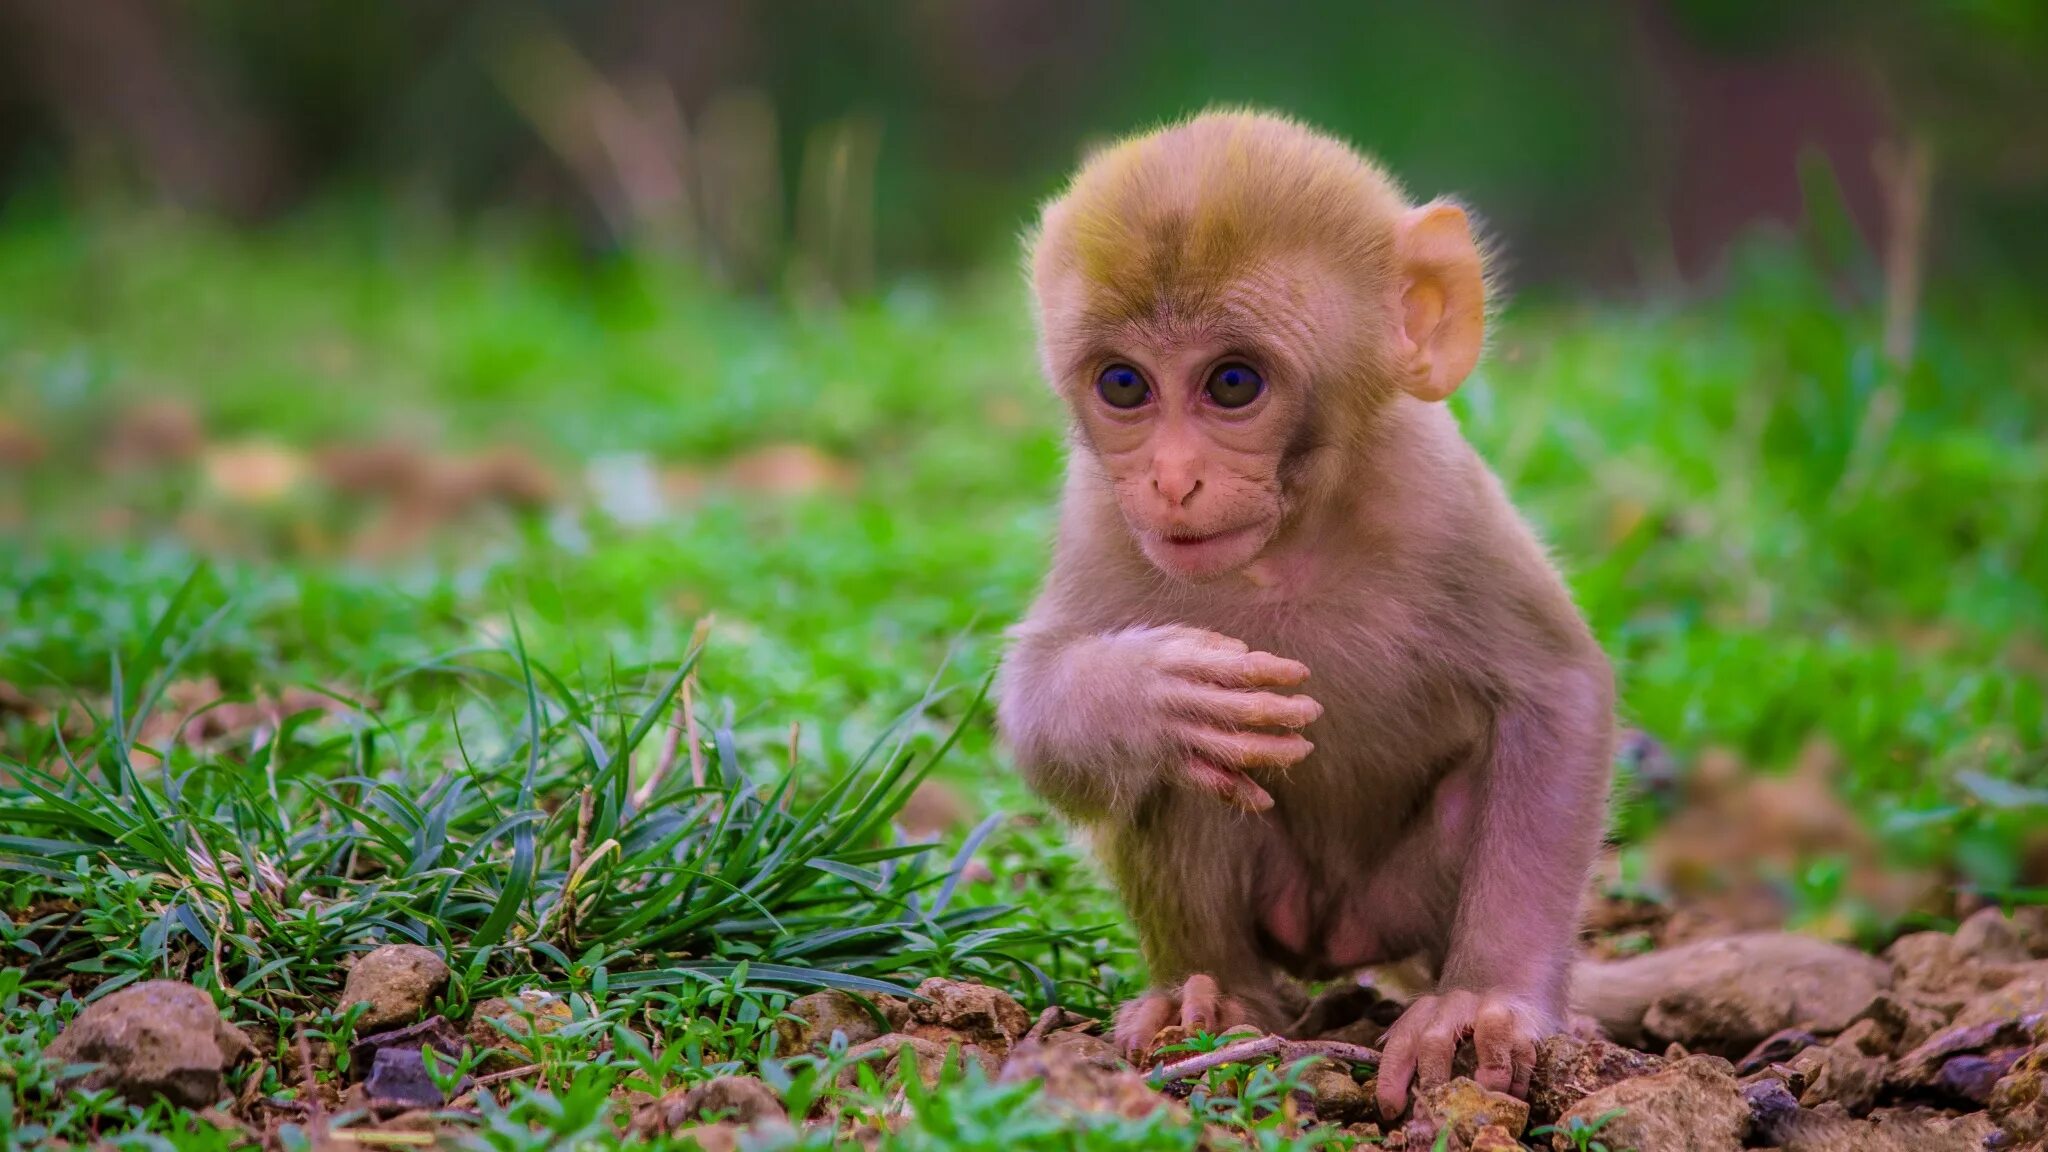 Monkey wallpapers. Яванская макака малыш. Милые обезьянки. Красивая обезьяна. Мартишка.